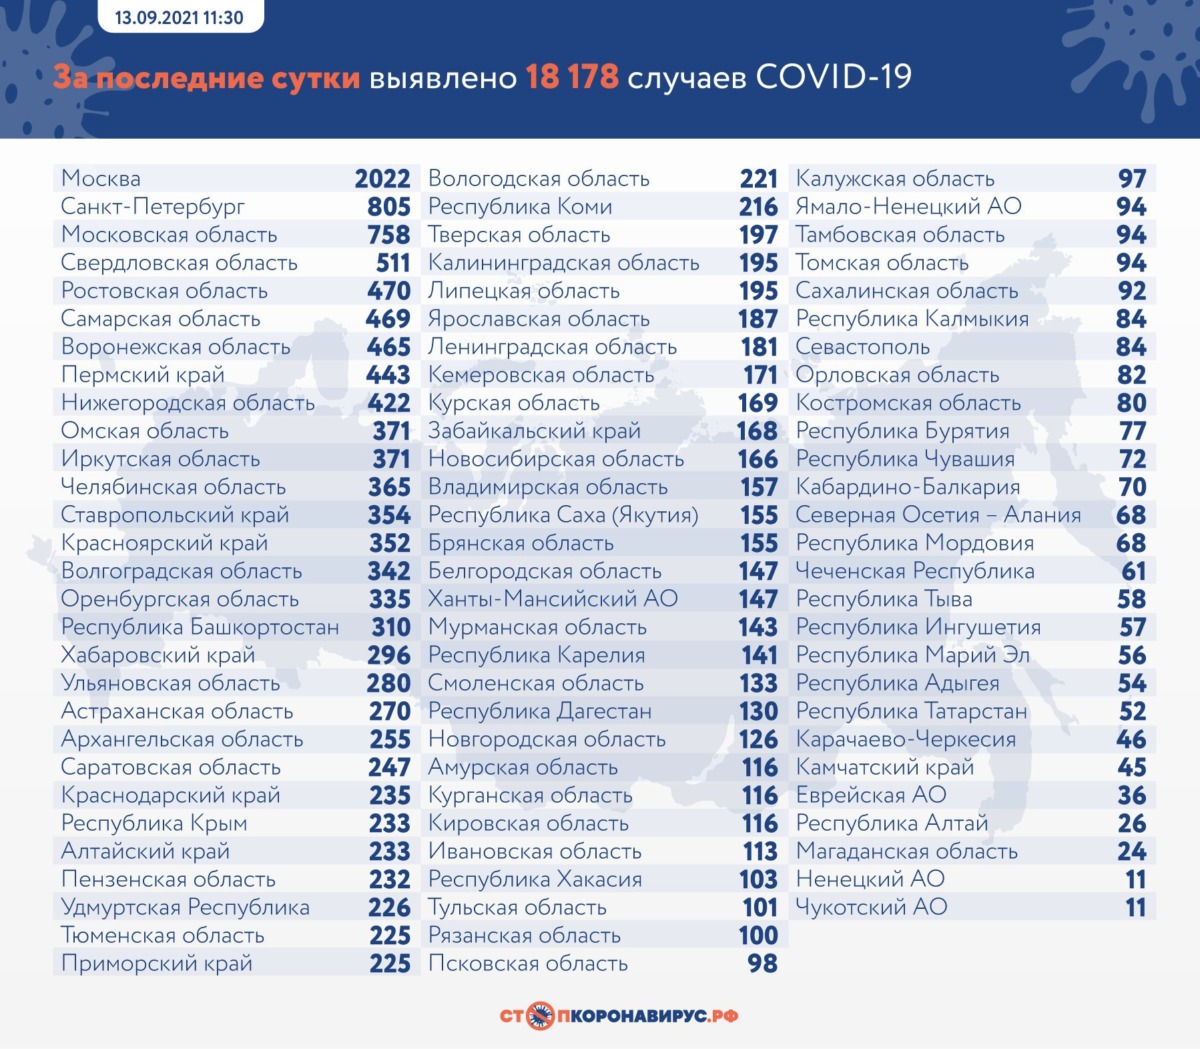 Оперативная статистика по коронавирусу в России на 13 сентября